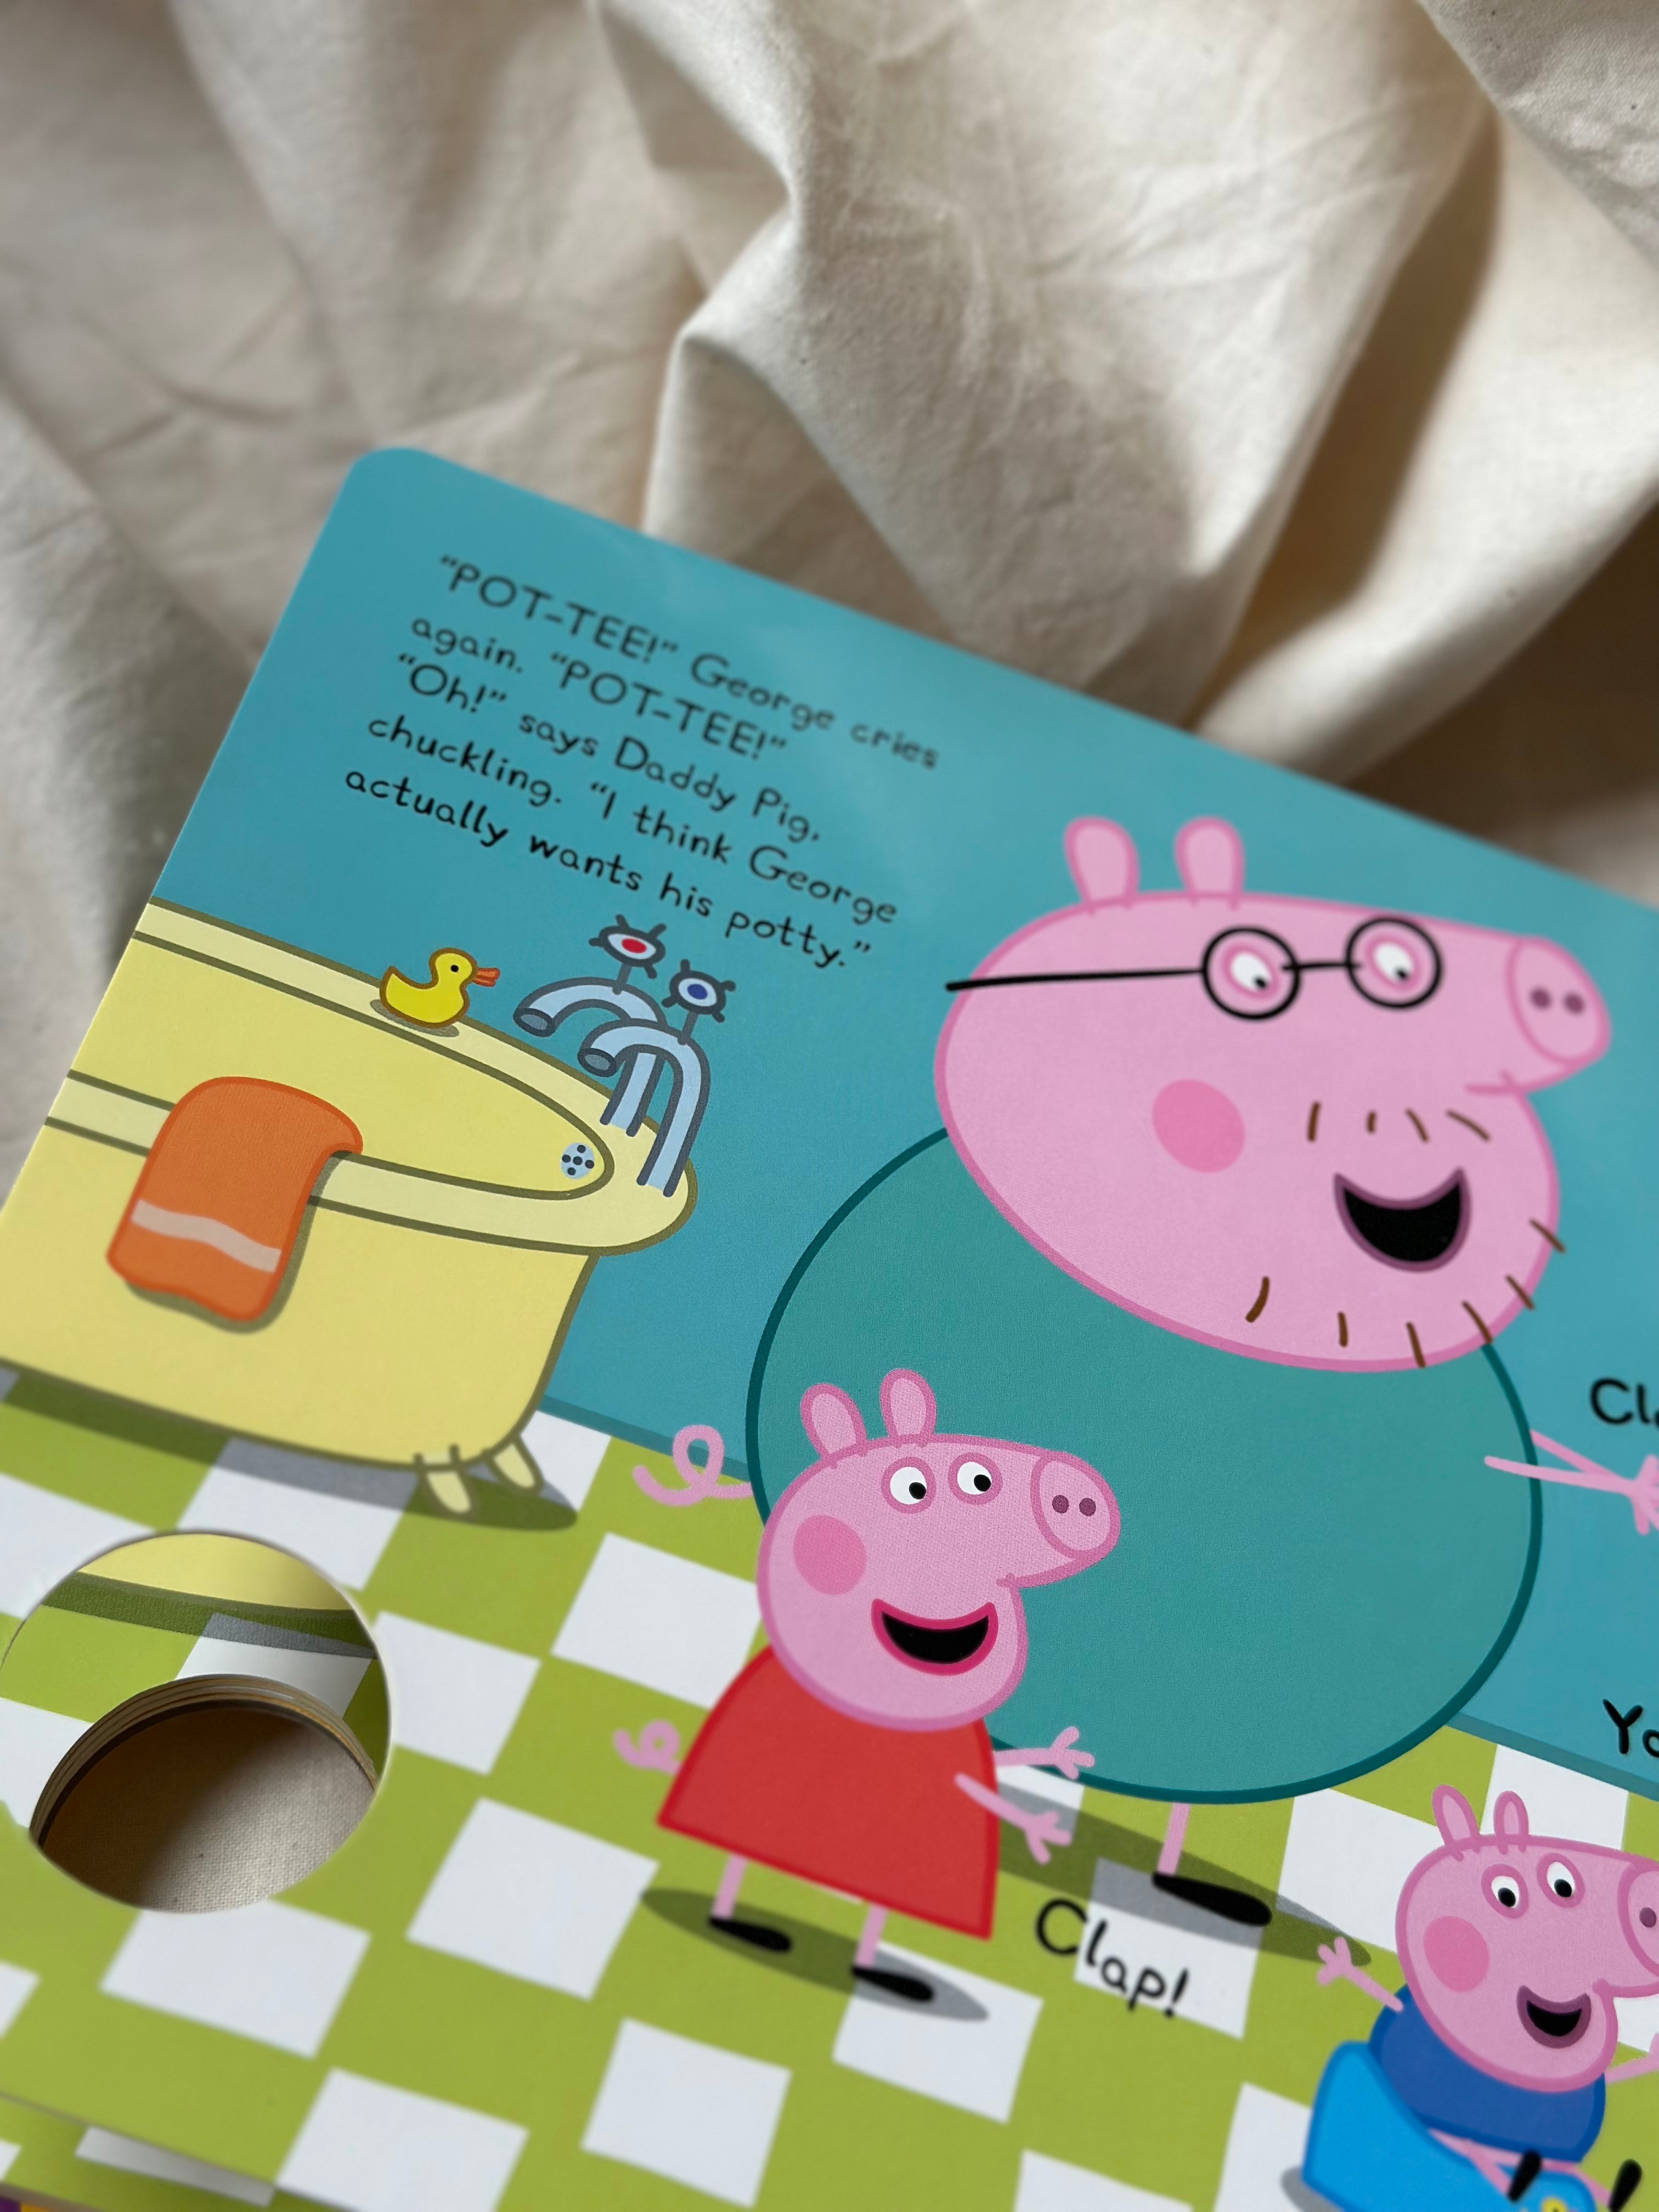 Peppa Pig: George's Potty [Book]